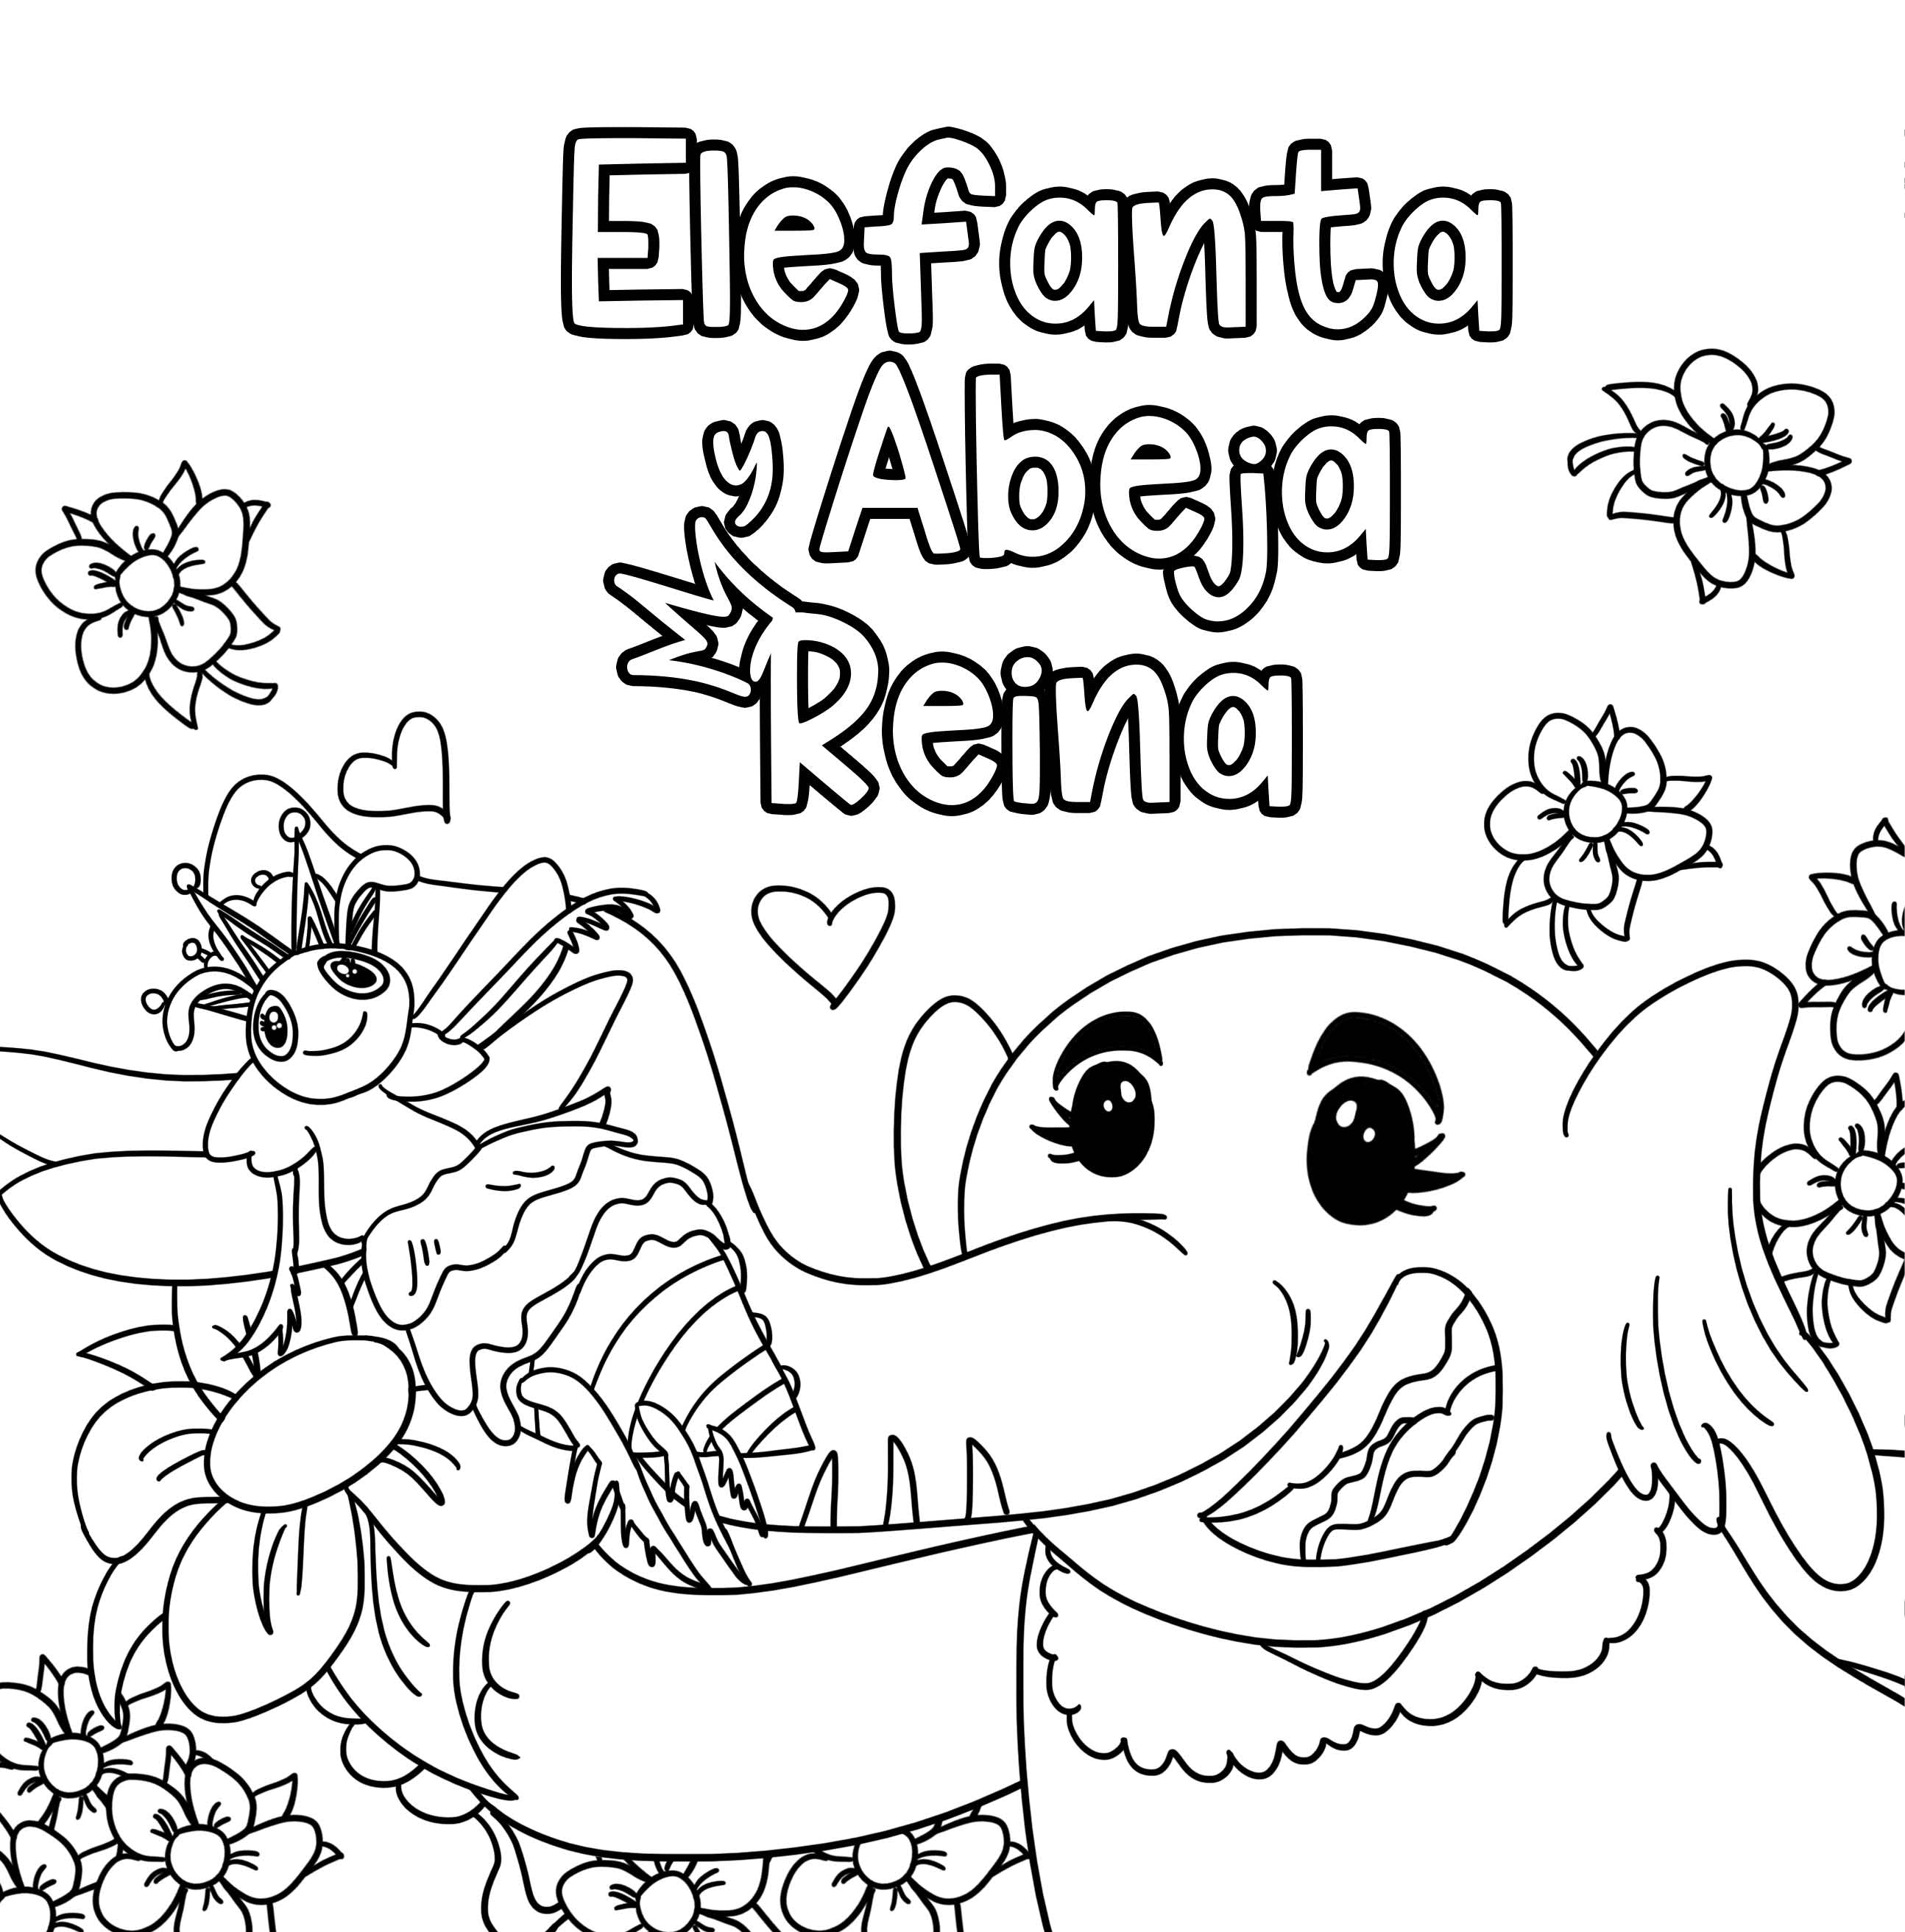 Elefanta et Abeja Reina (Couverture rigide)